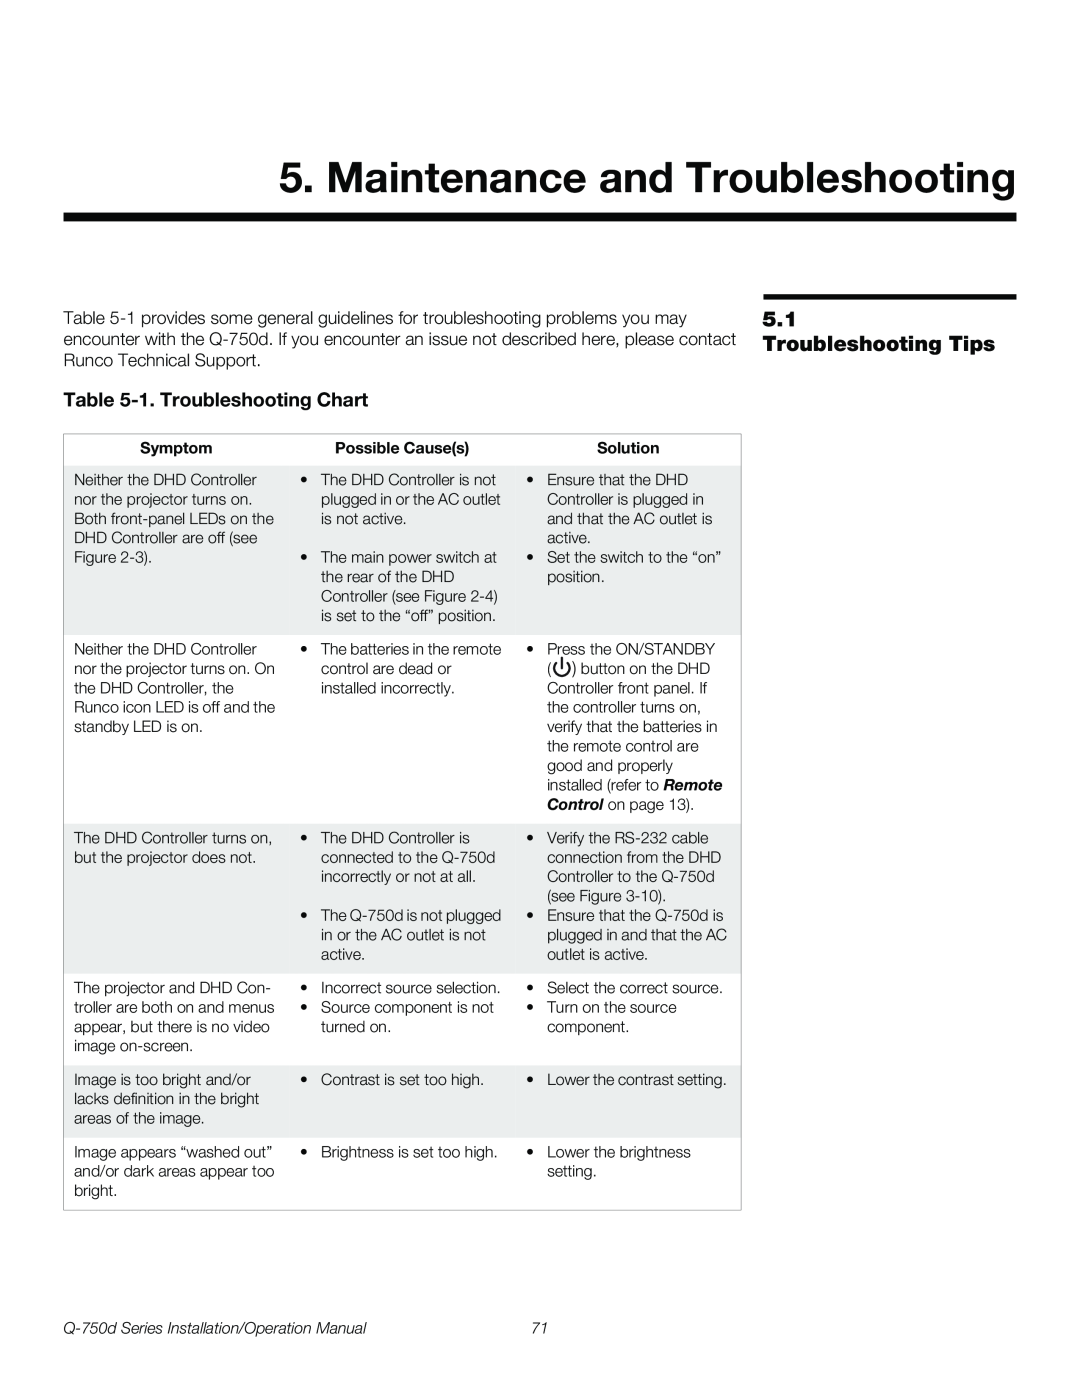 Runco Q-750D operation manual Maintenance and Troubleshooting, Troubleshooting Tips, 1.Troubleshooting Chart 